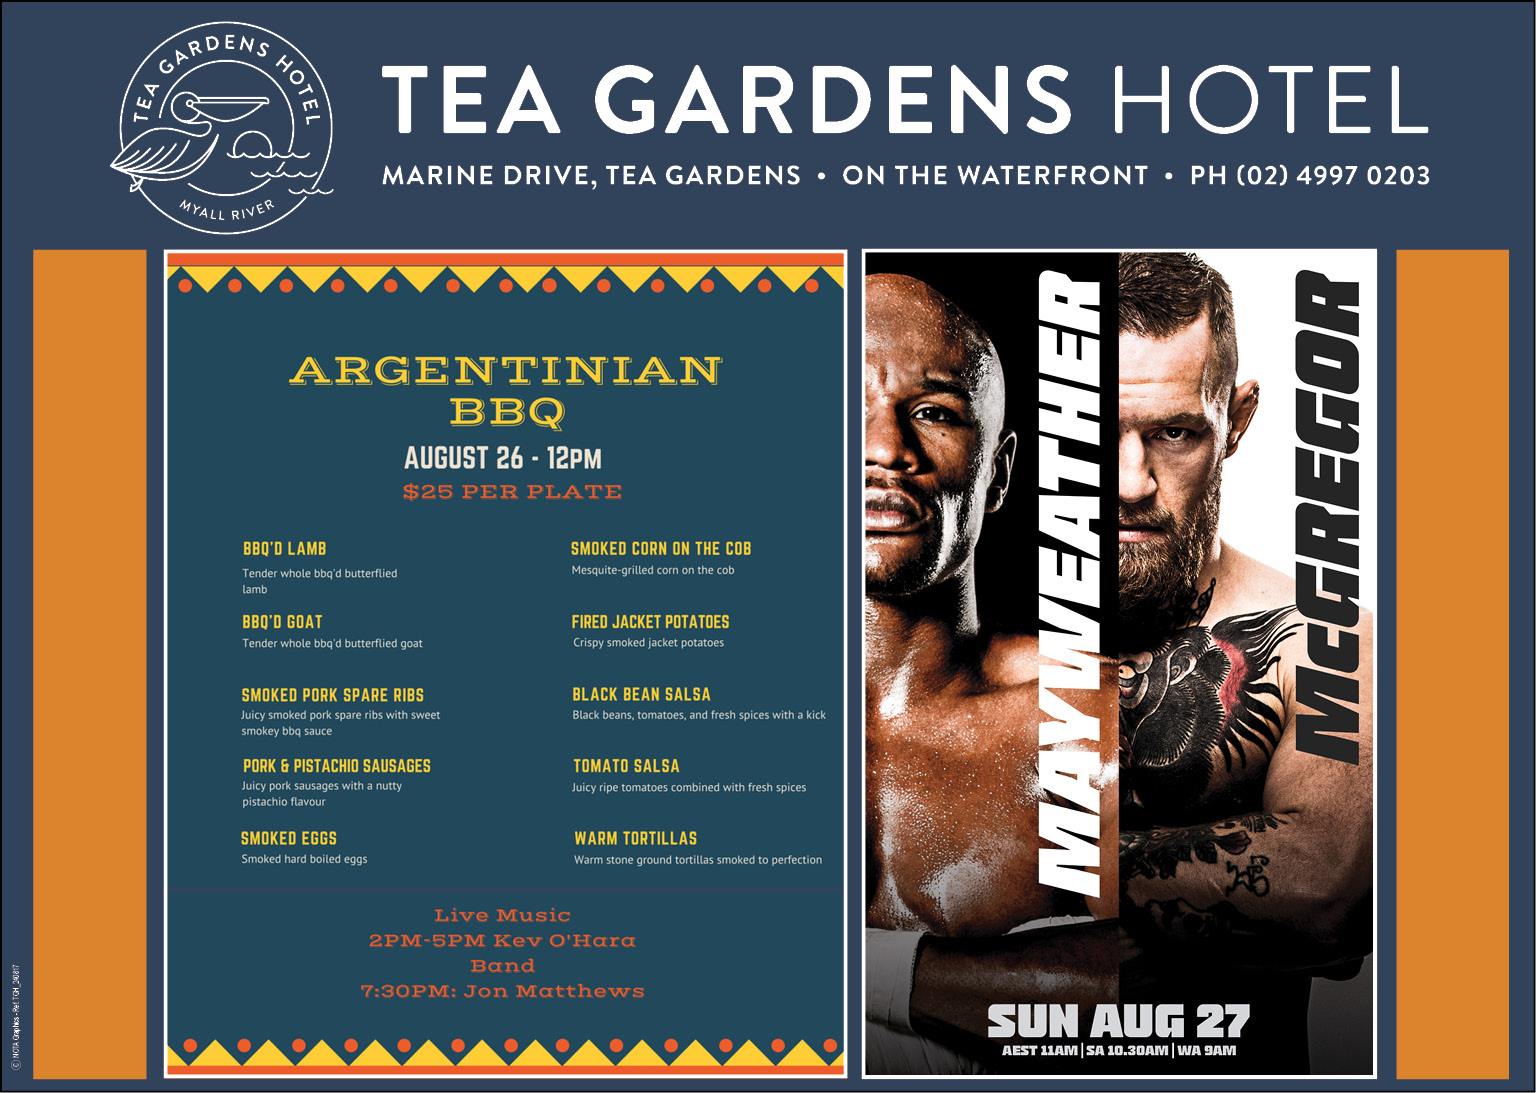 Tea Gardens Hotel